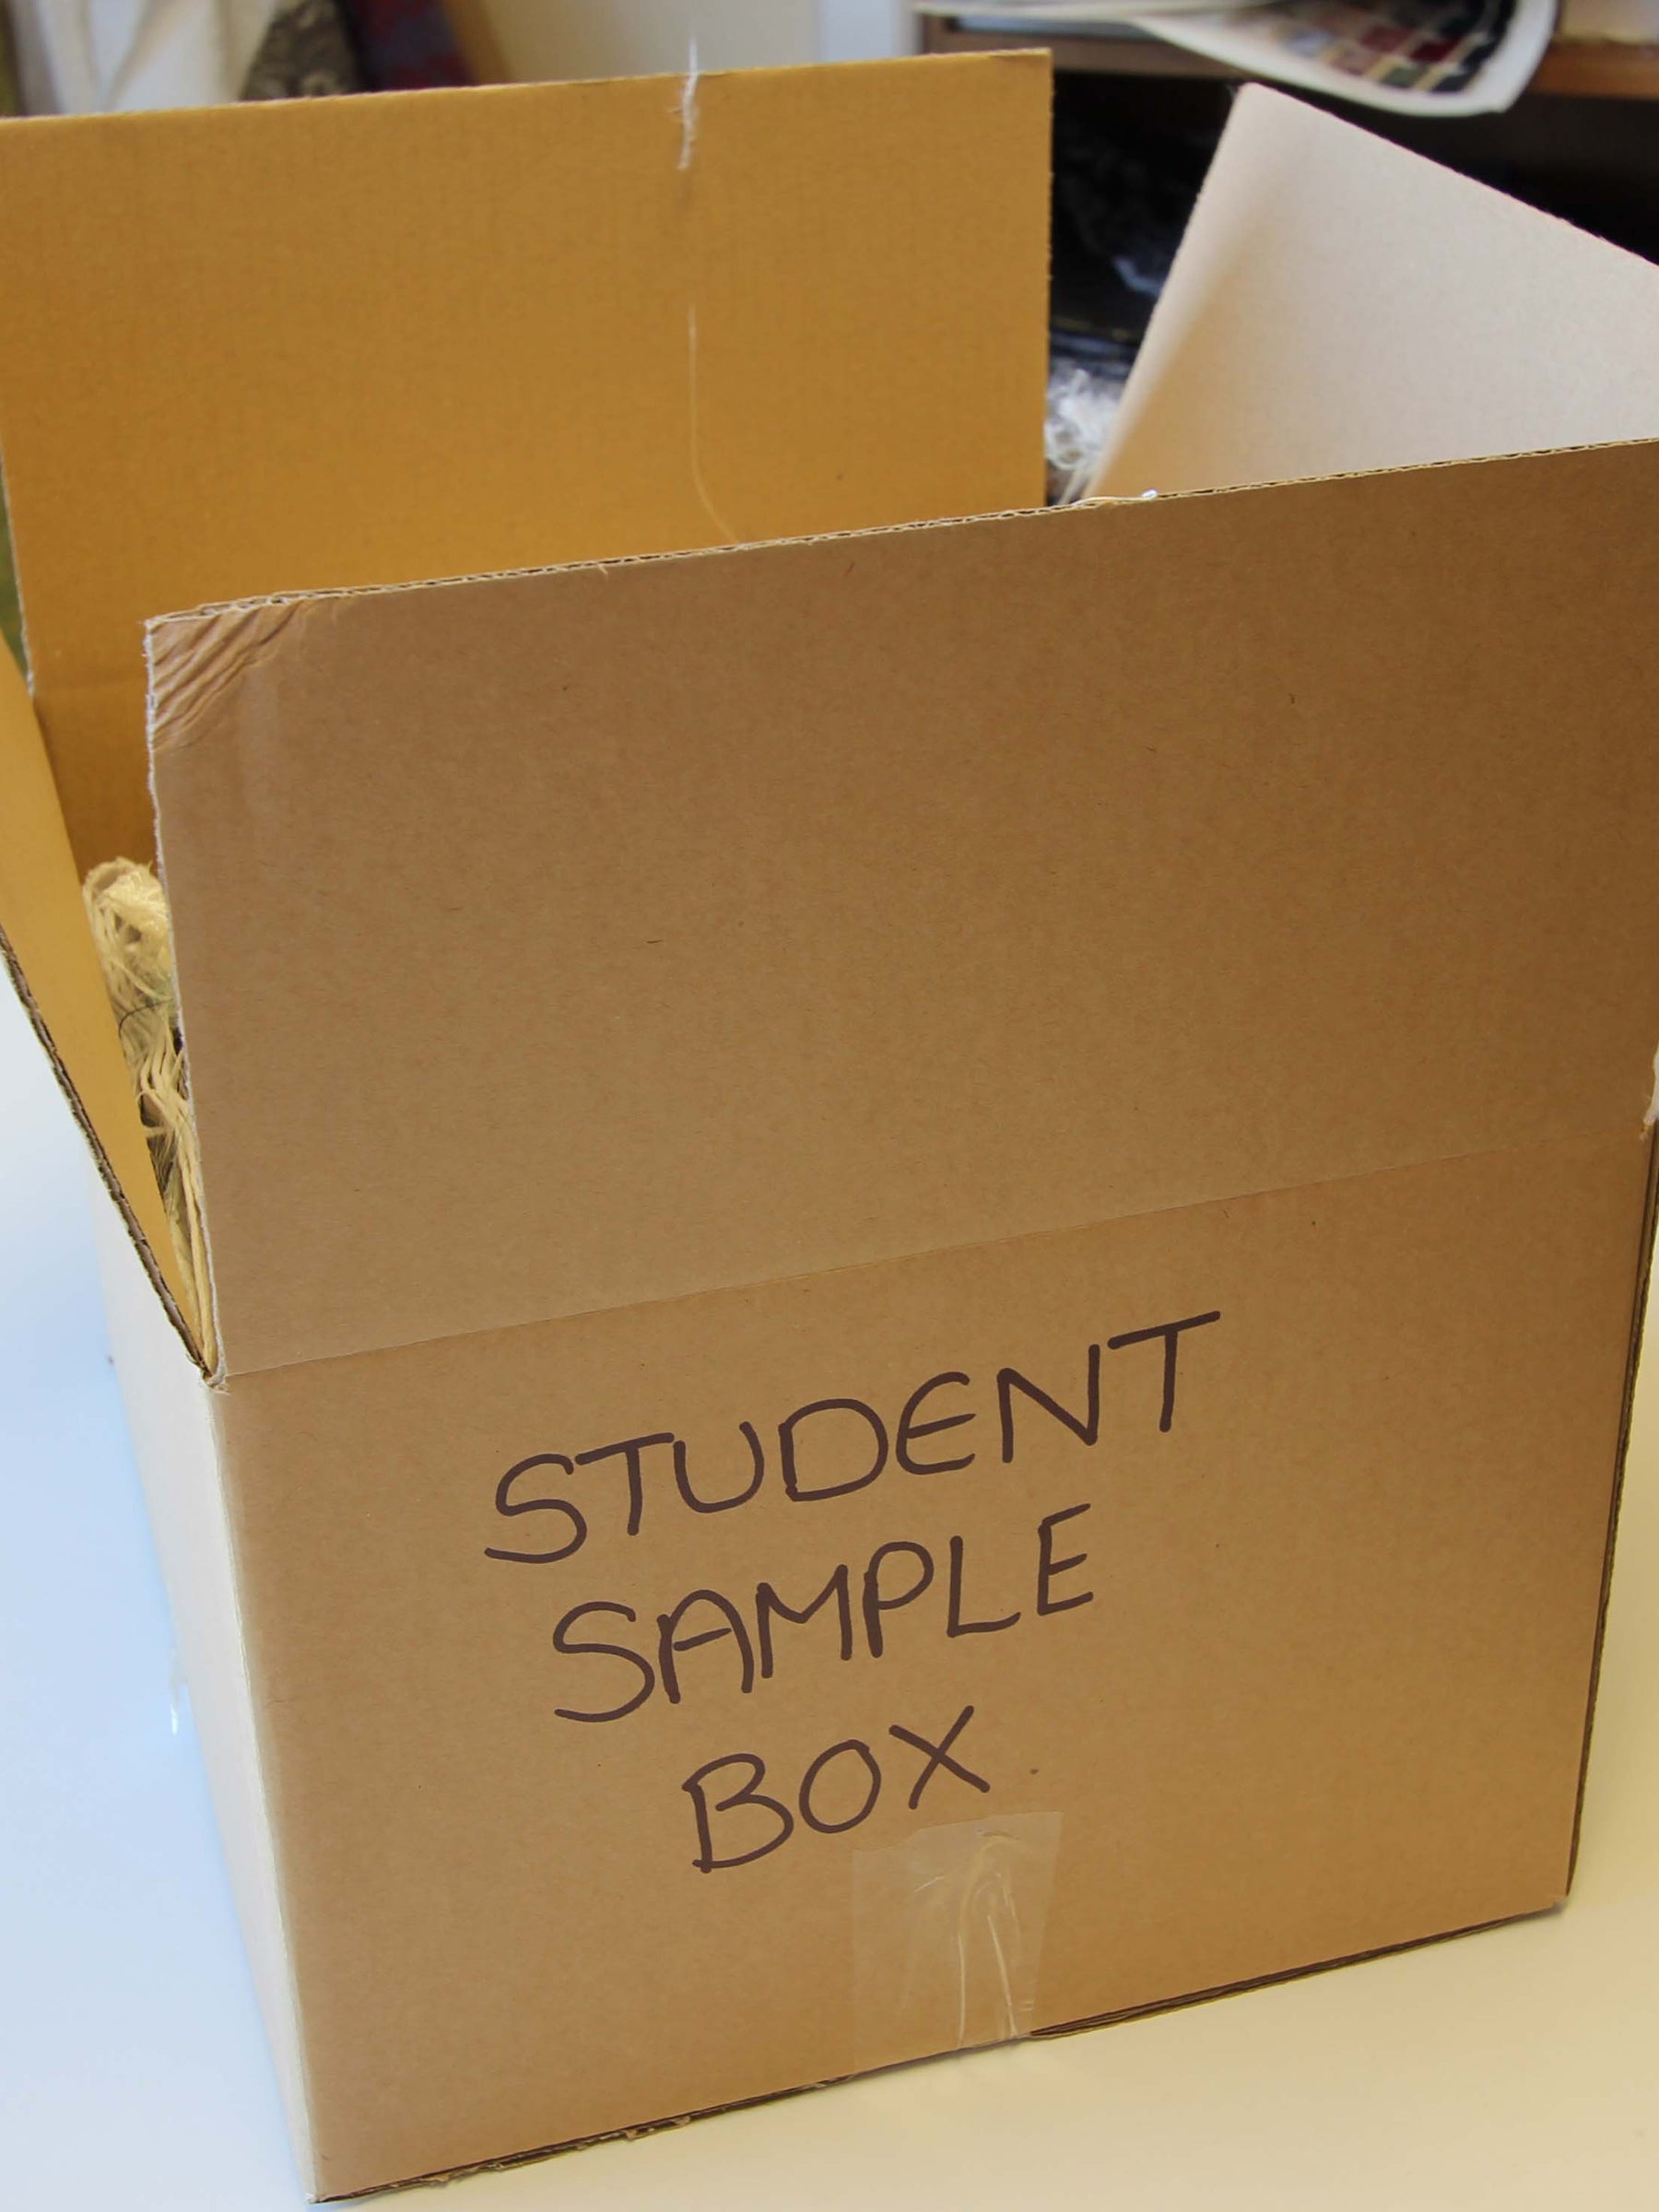 Student Sample Box